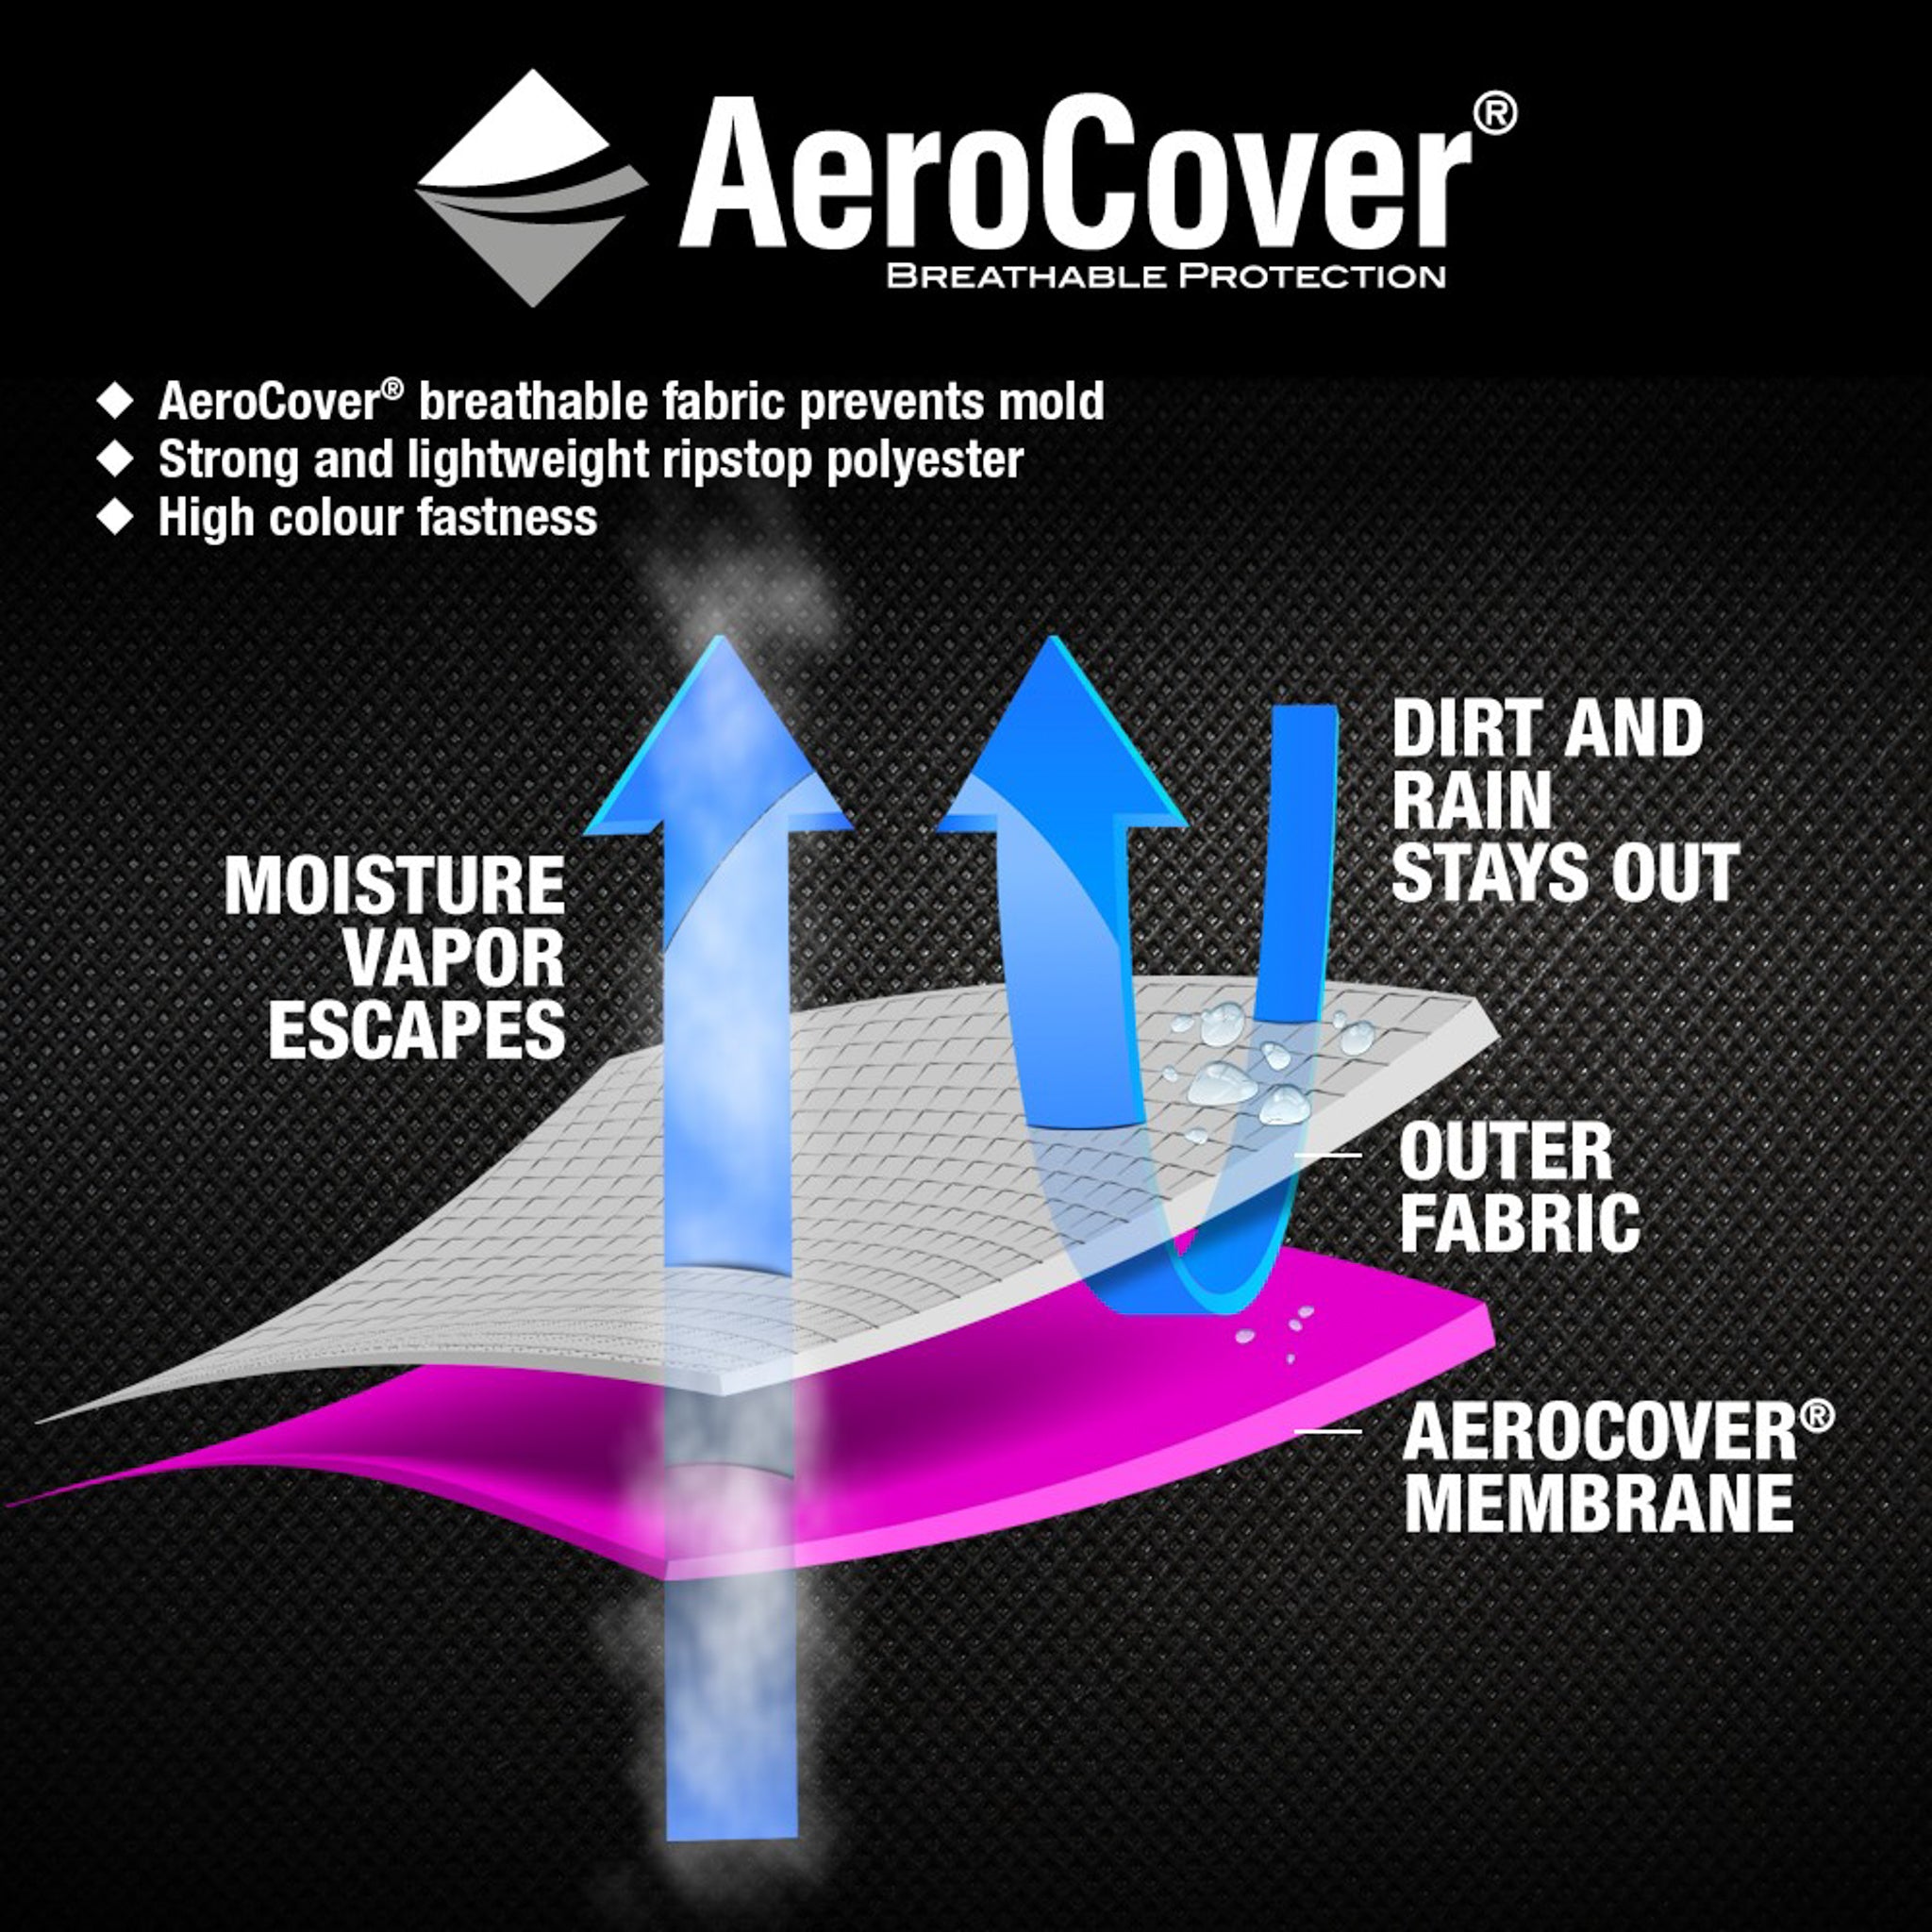 AeroCover - Lounge Set Cover 270 x 210 x 70cm high